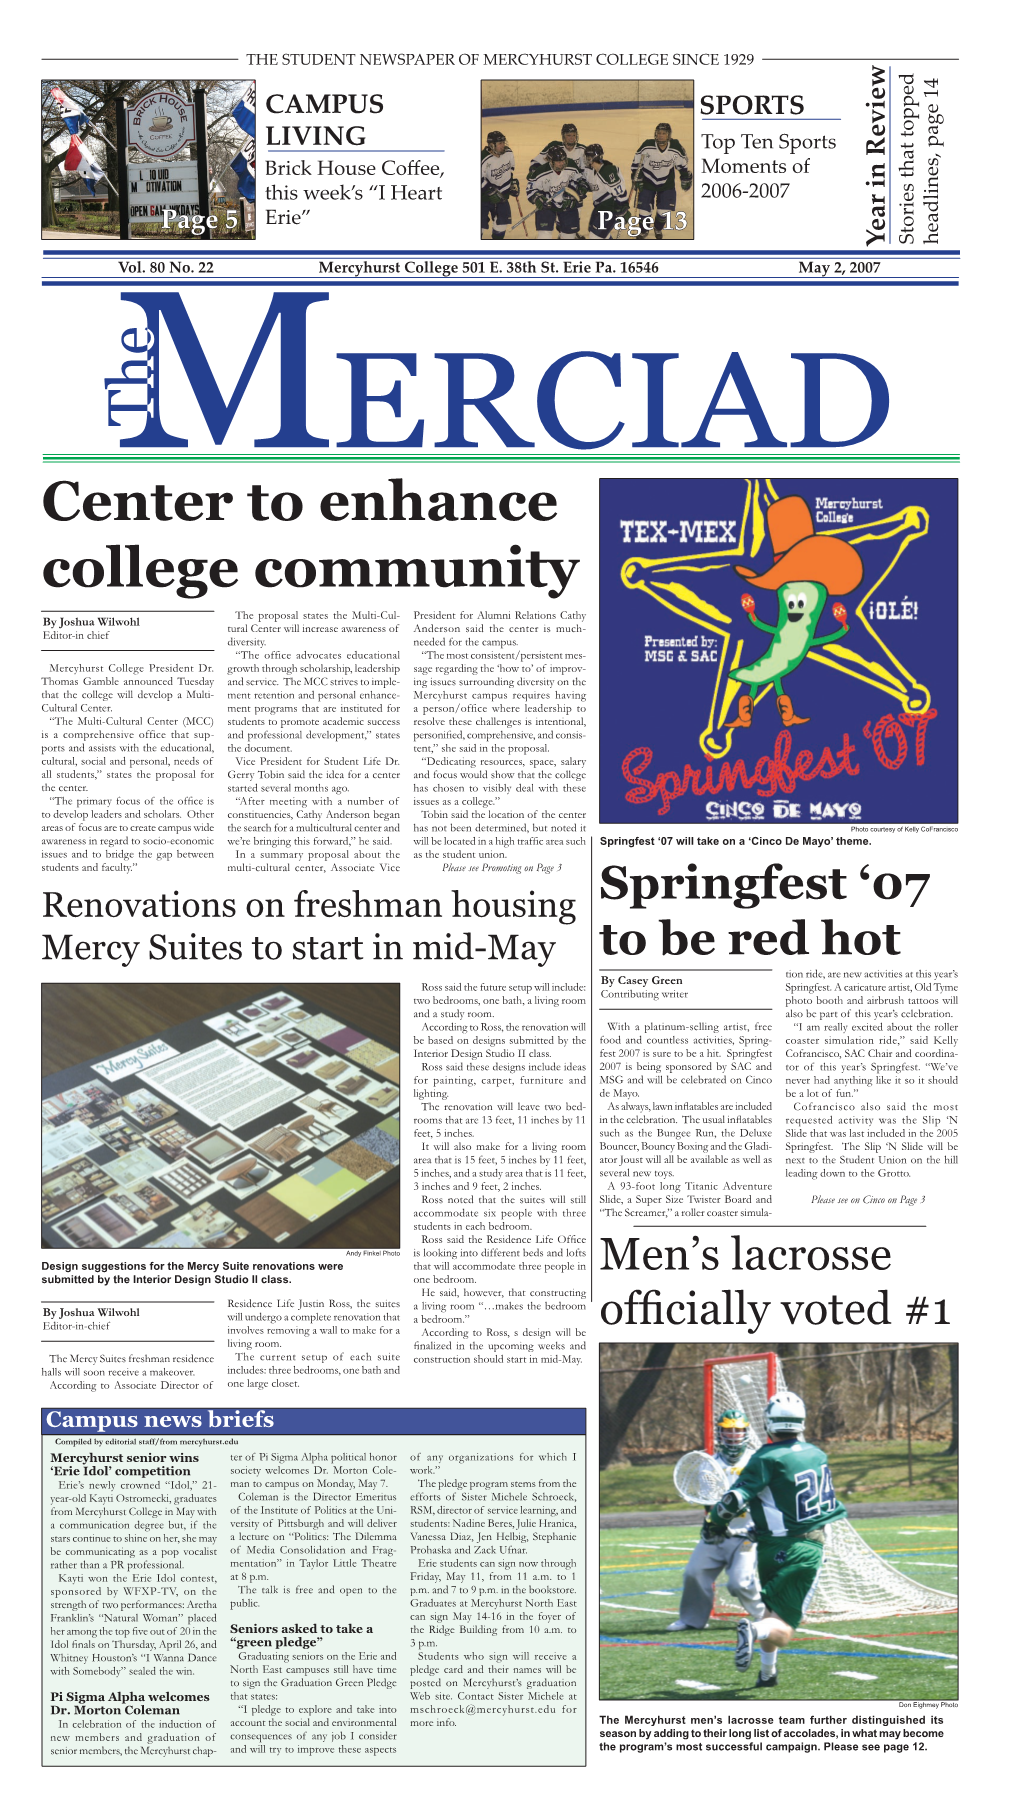 Center to Enhance College Community